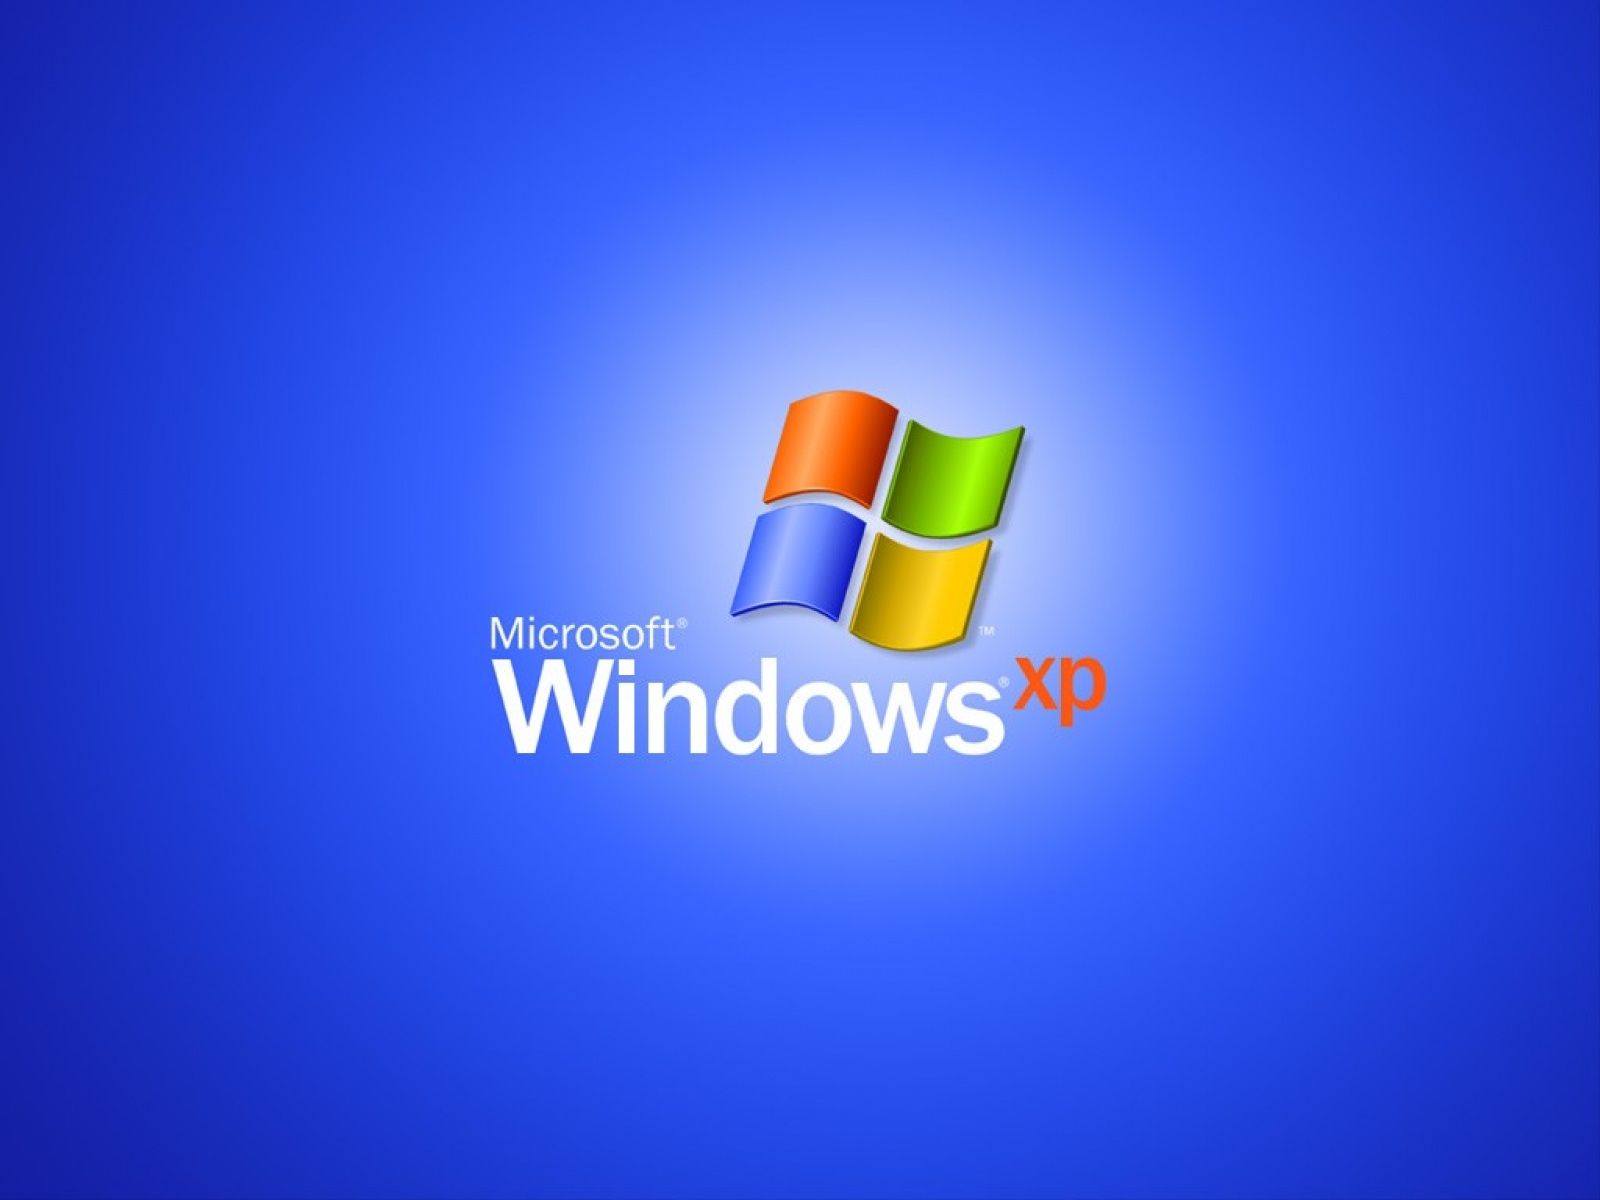 Windows XP Blank Meme Template